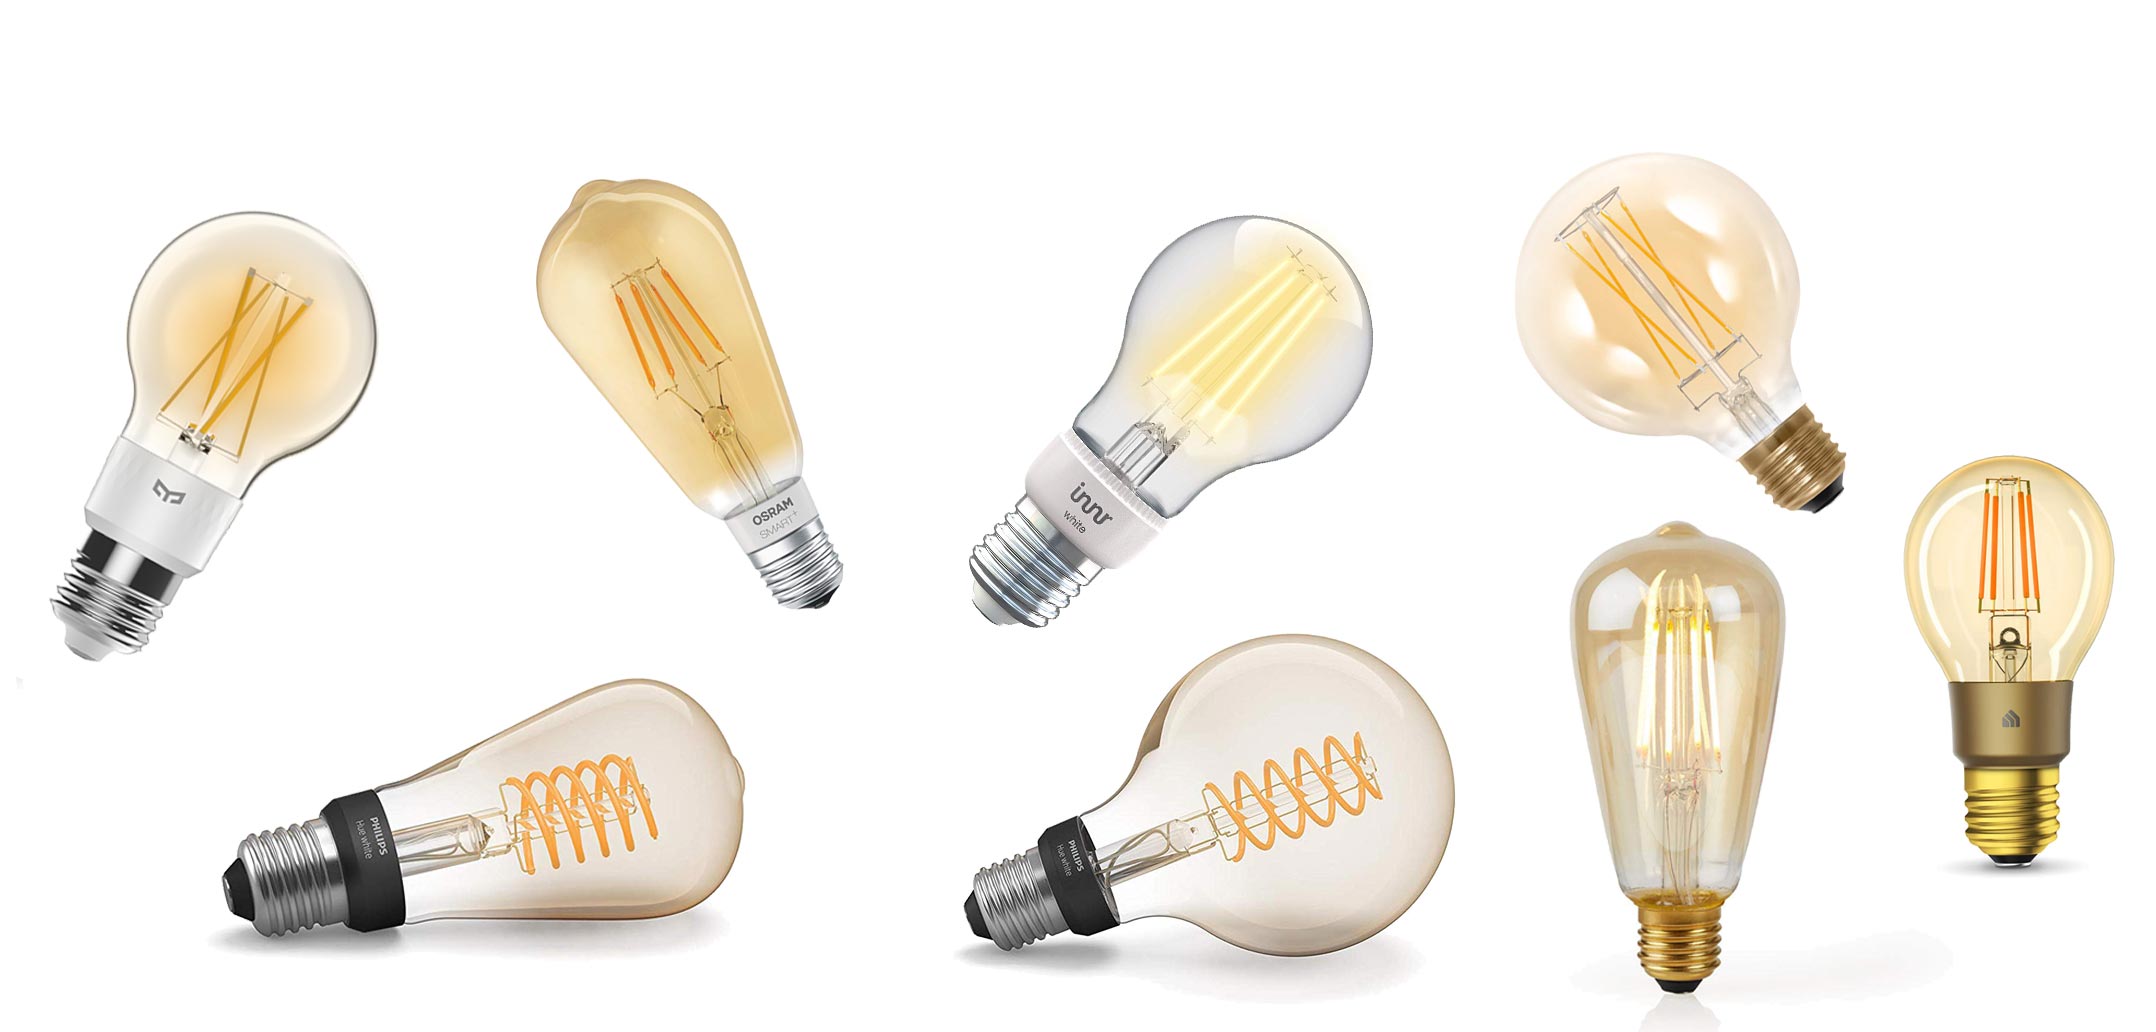 Osram Smart LED Lampe 8,5W E27 ZigBee dimmbar warmweiß bis tageslicht Glühbirne